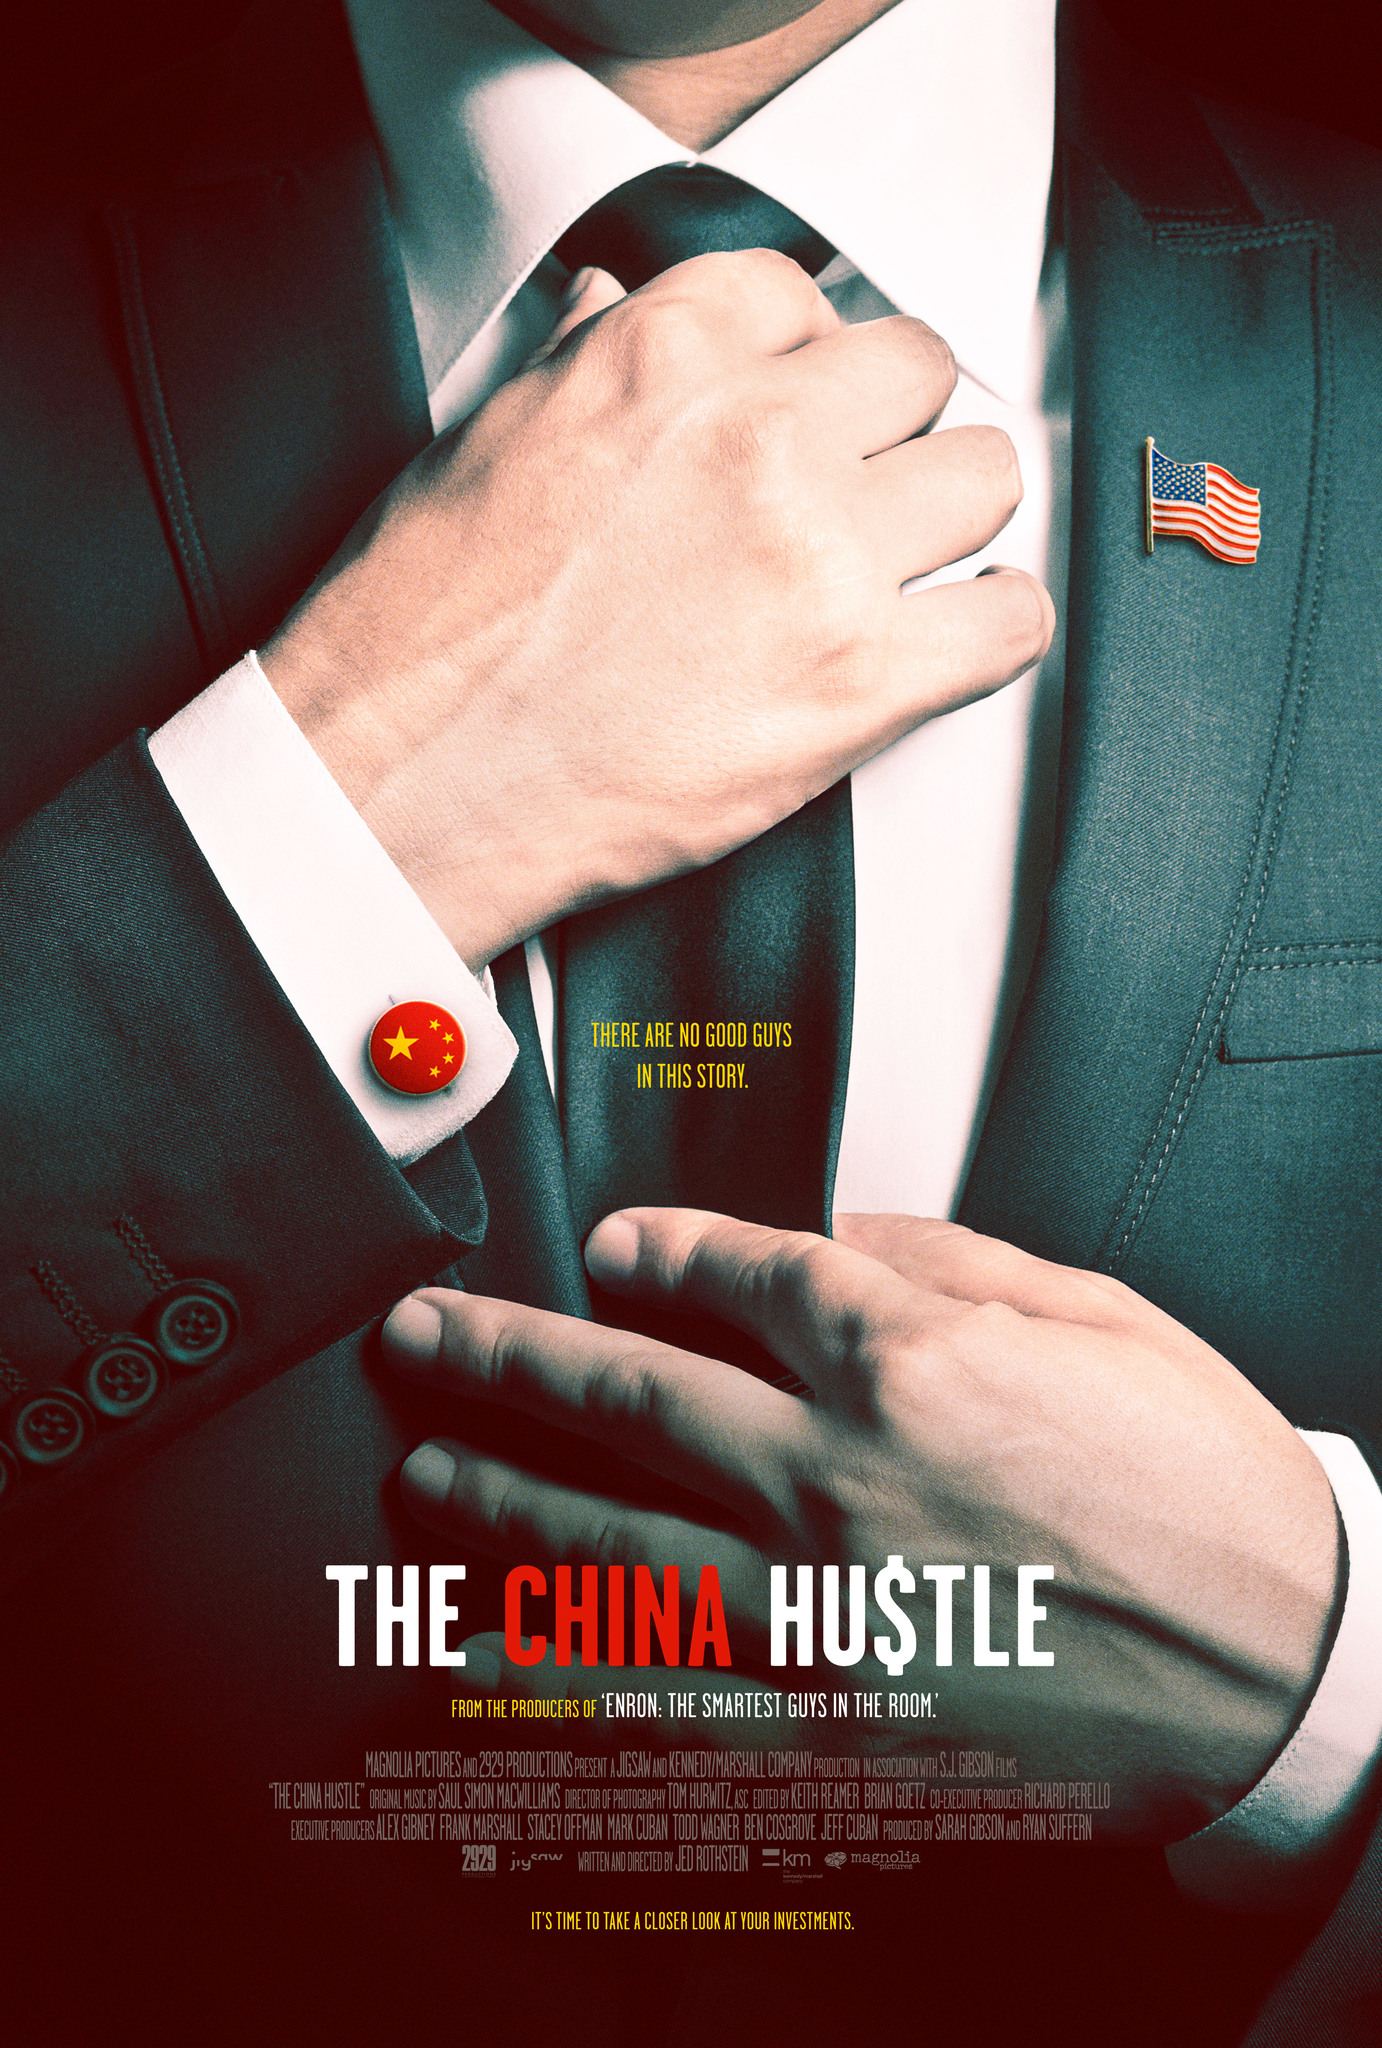 Nonton film The China Hustle layarkaca21 indoxx1 ganool online streaming terbaru